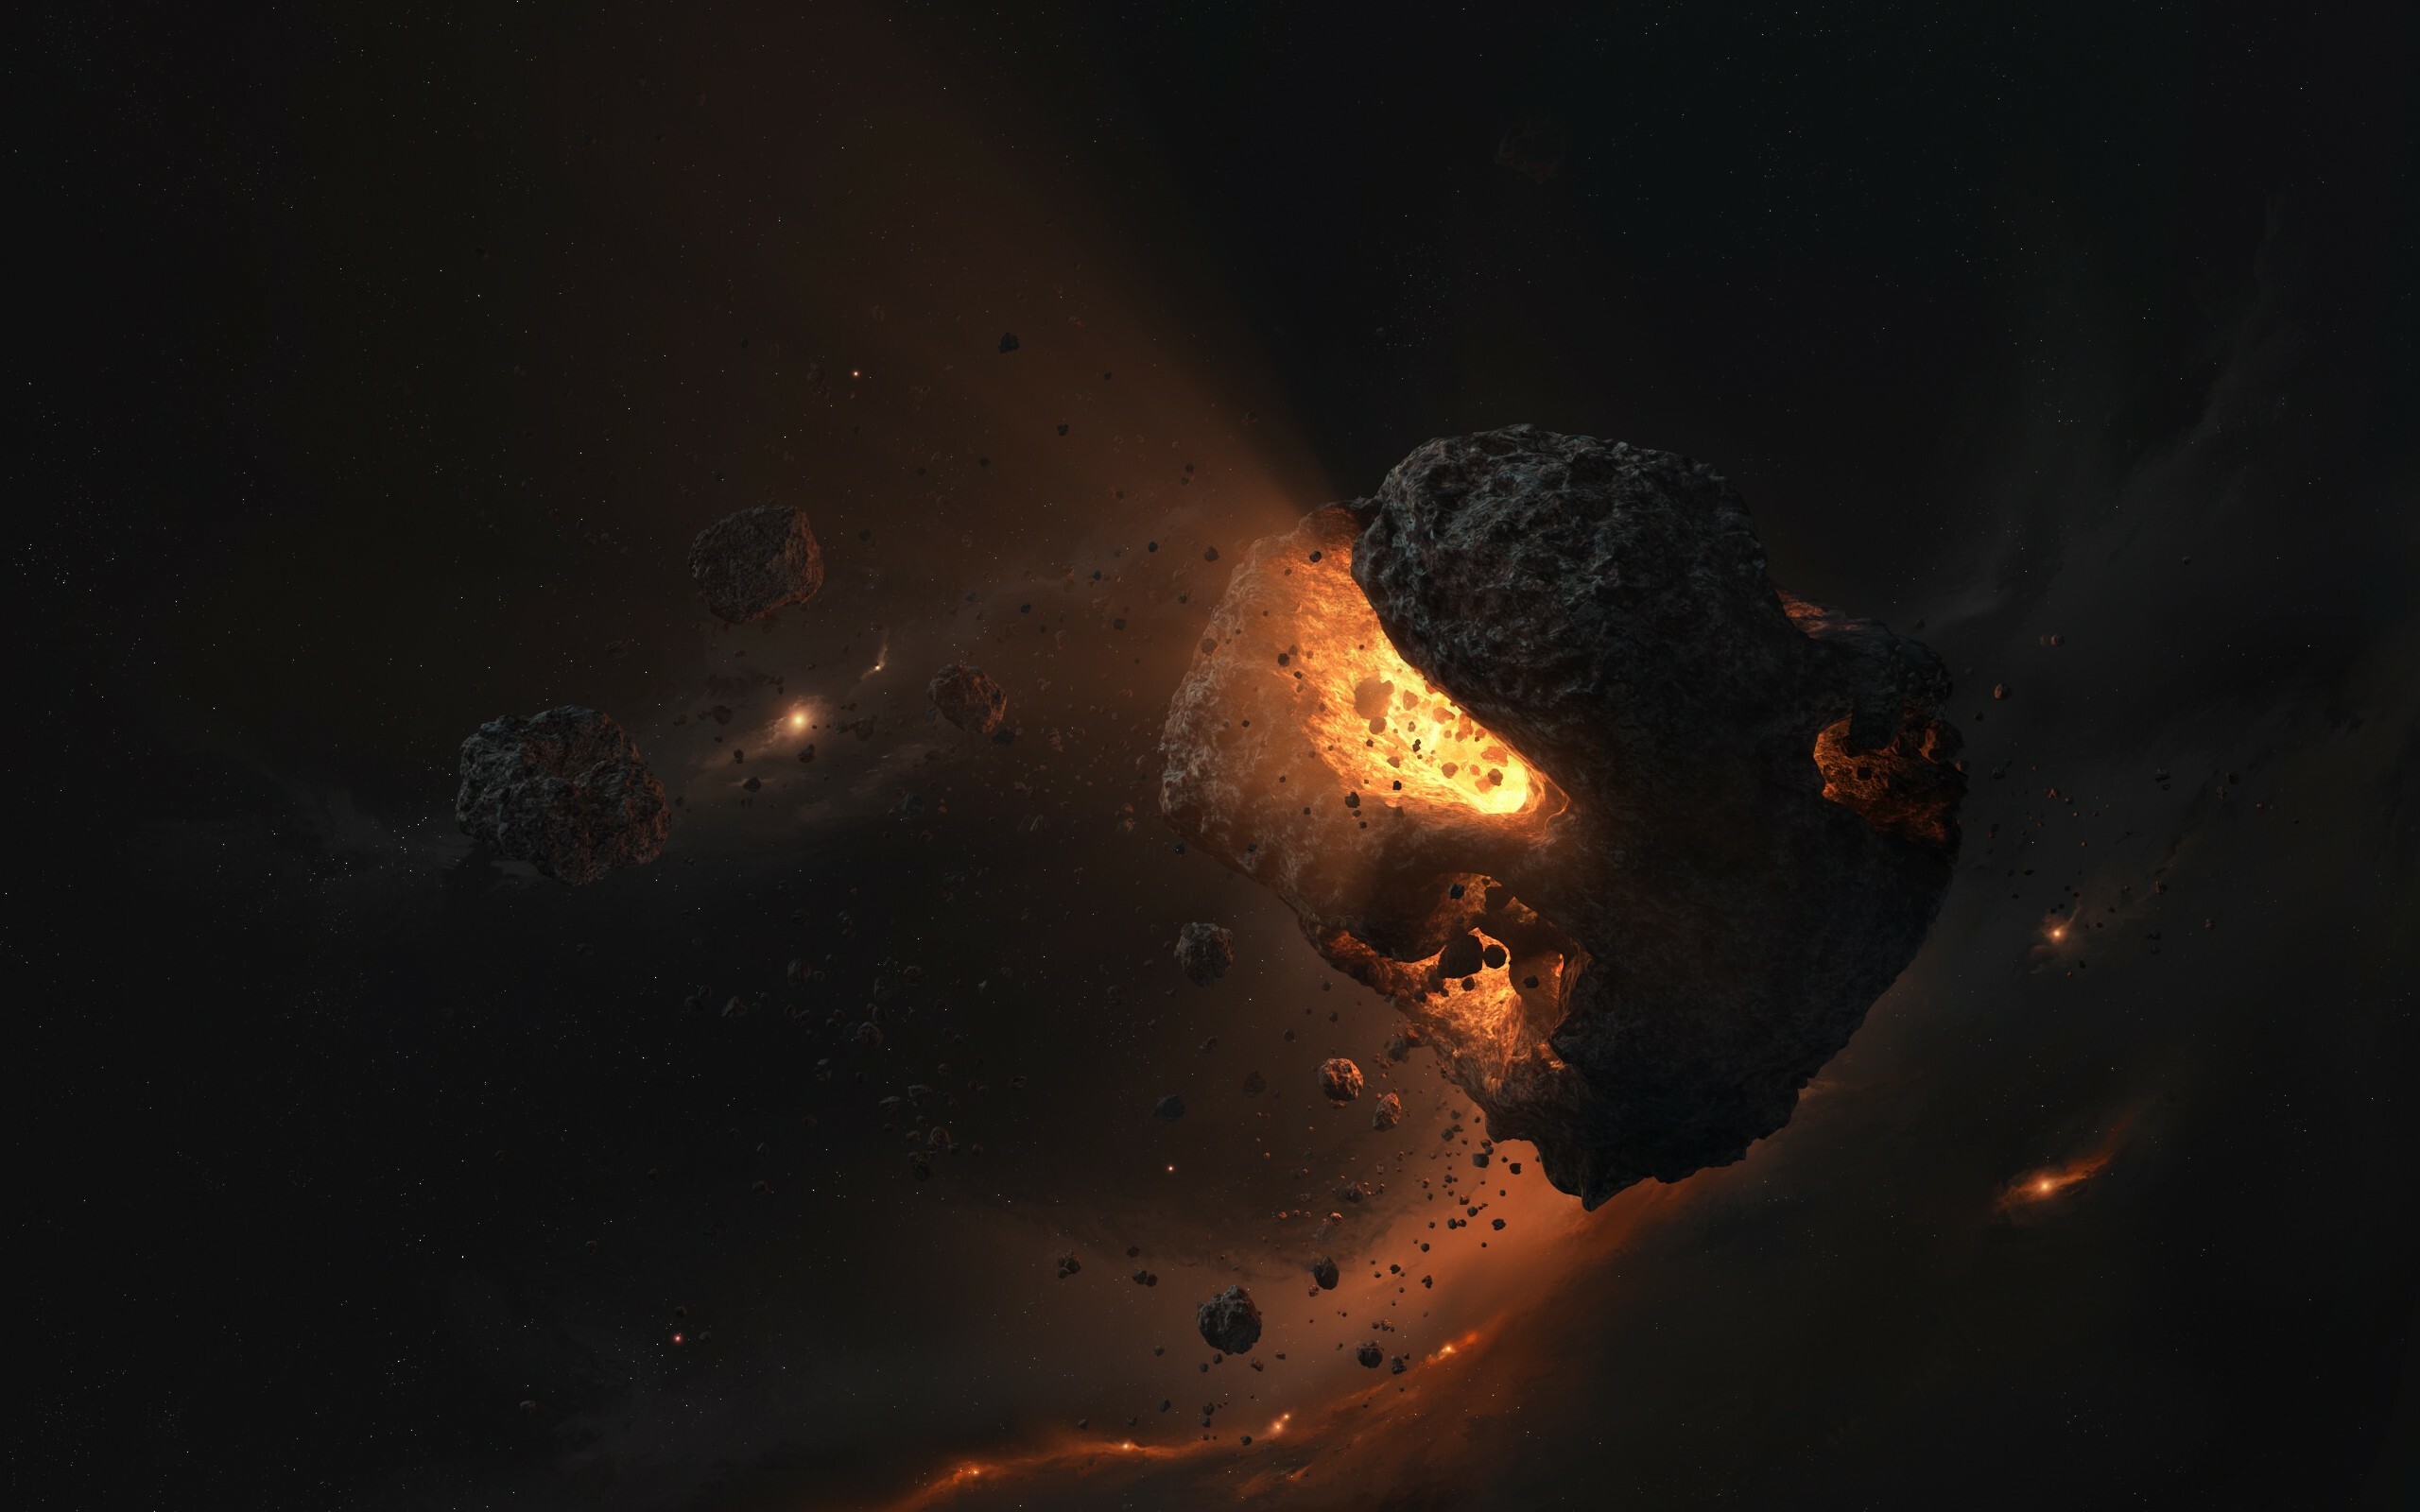 asteroid destroying earth wallpaper